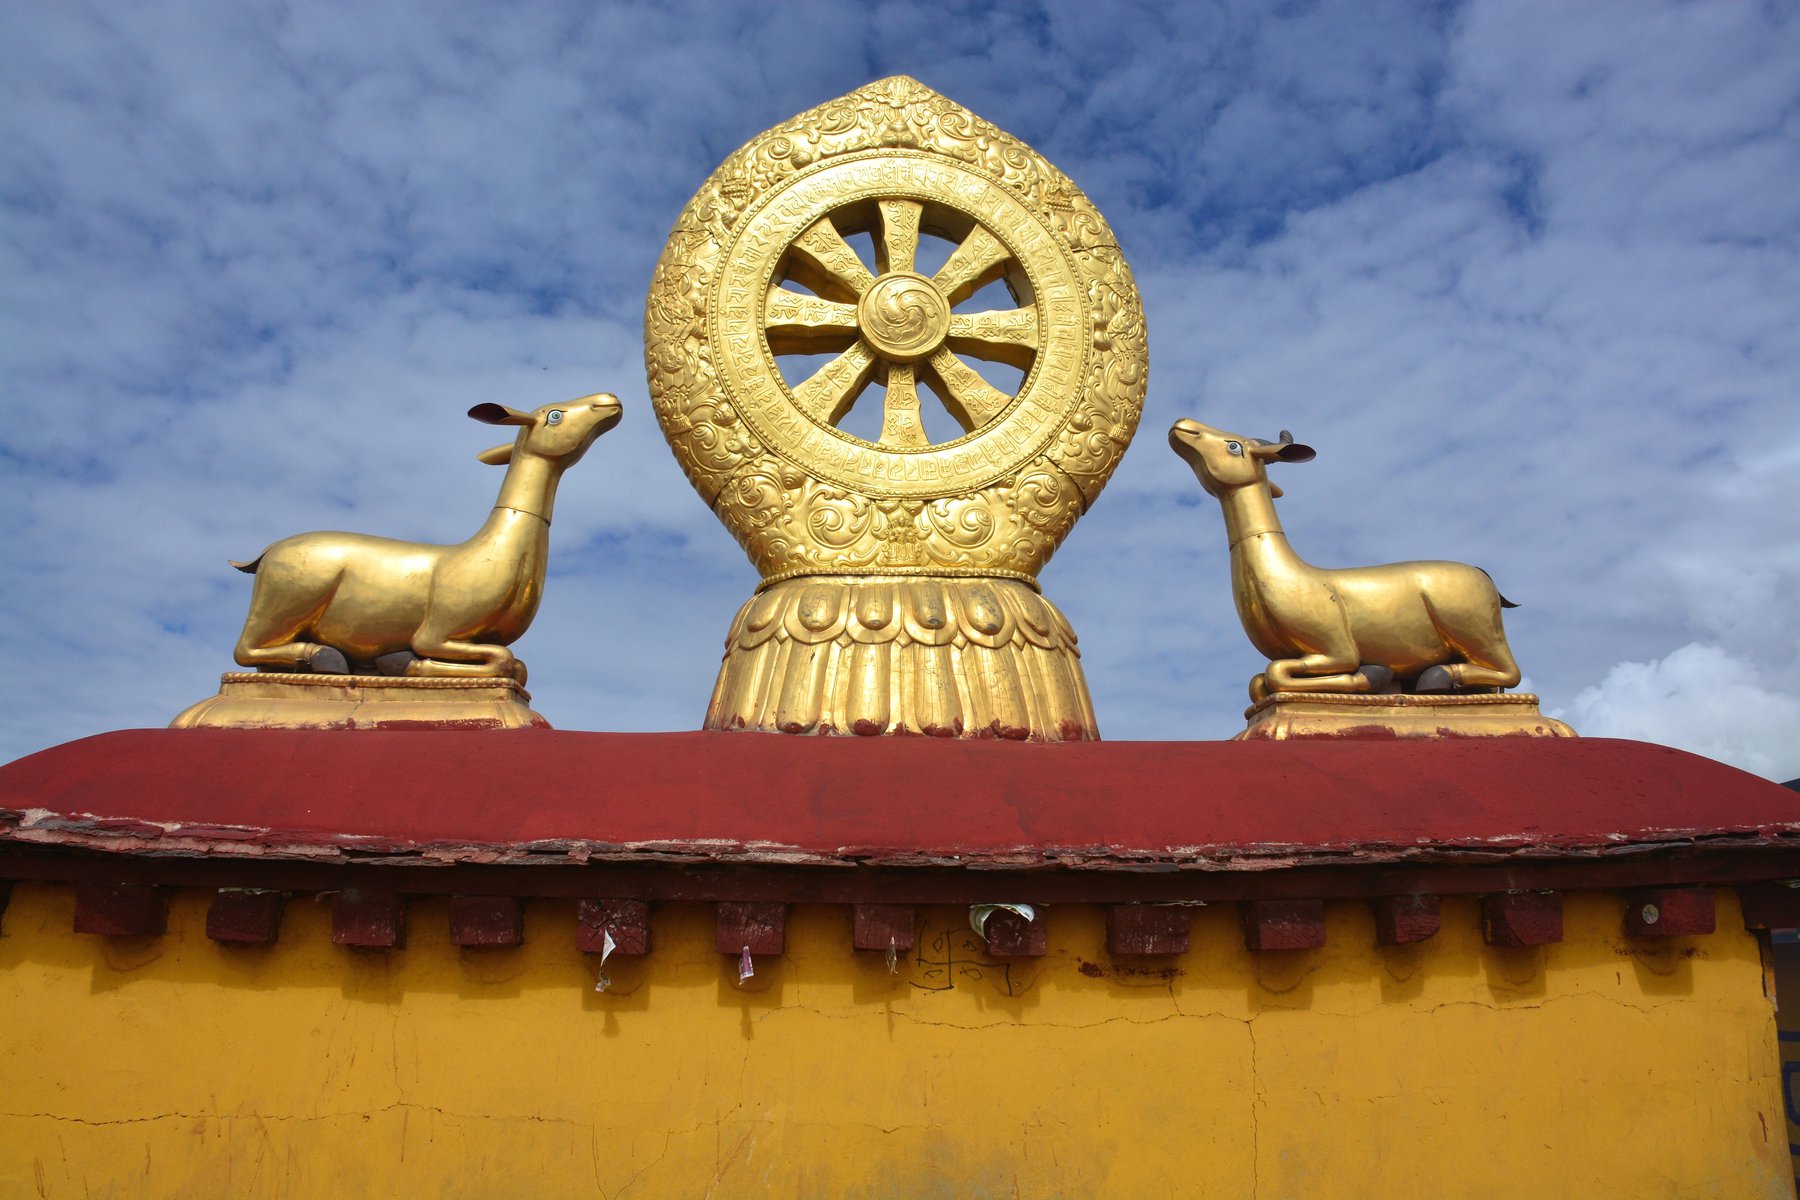 Taket på Jokhang pryds av utsmyckning i guld